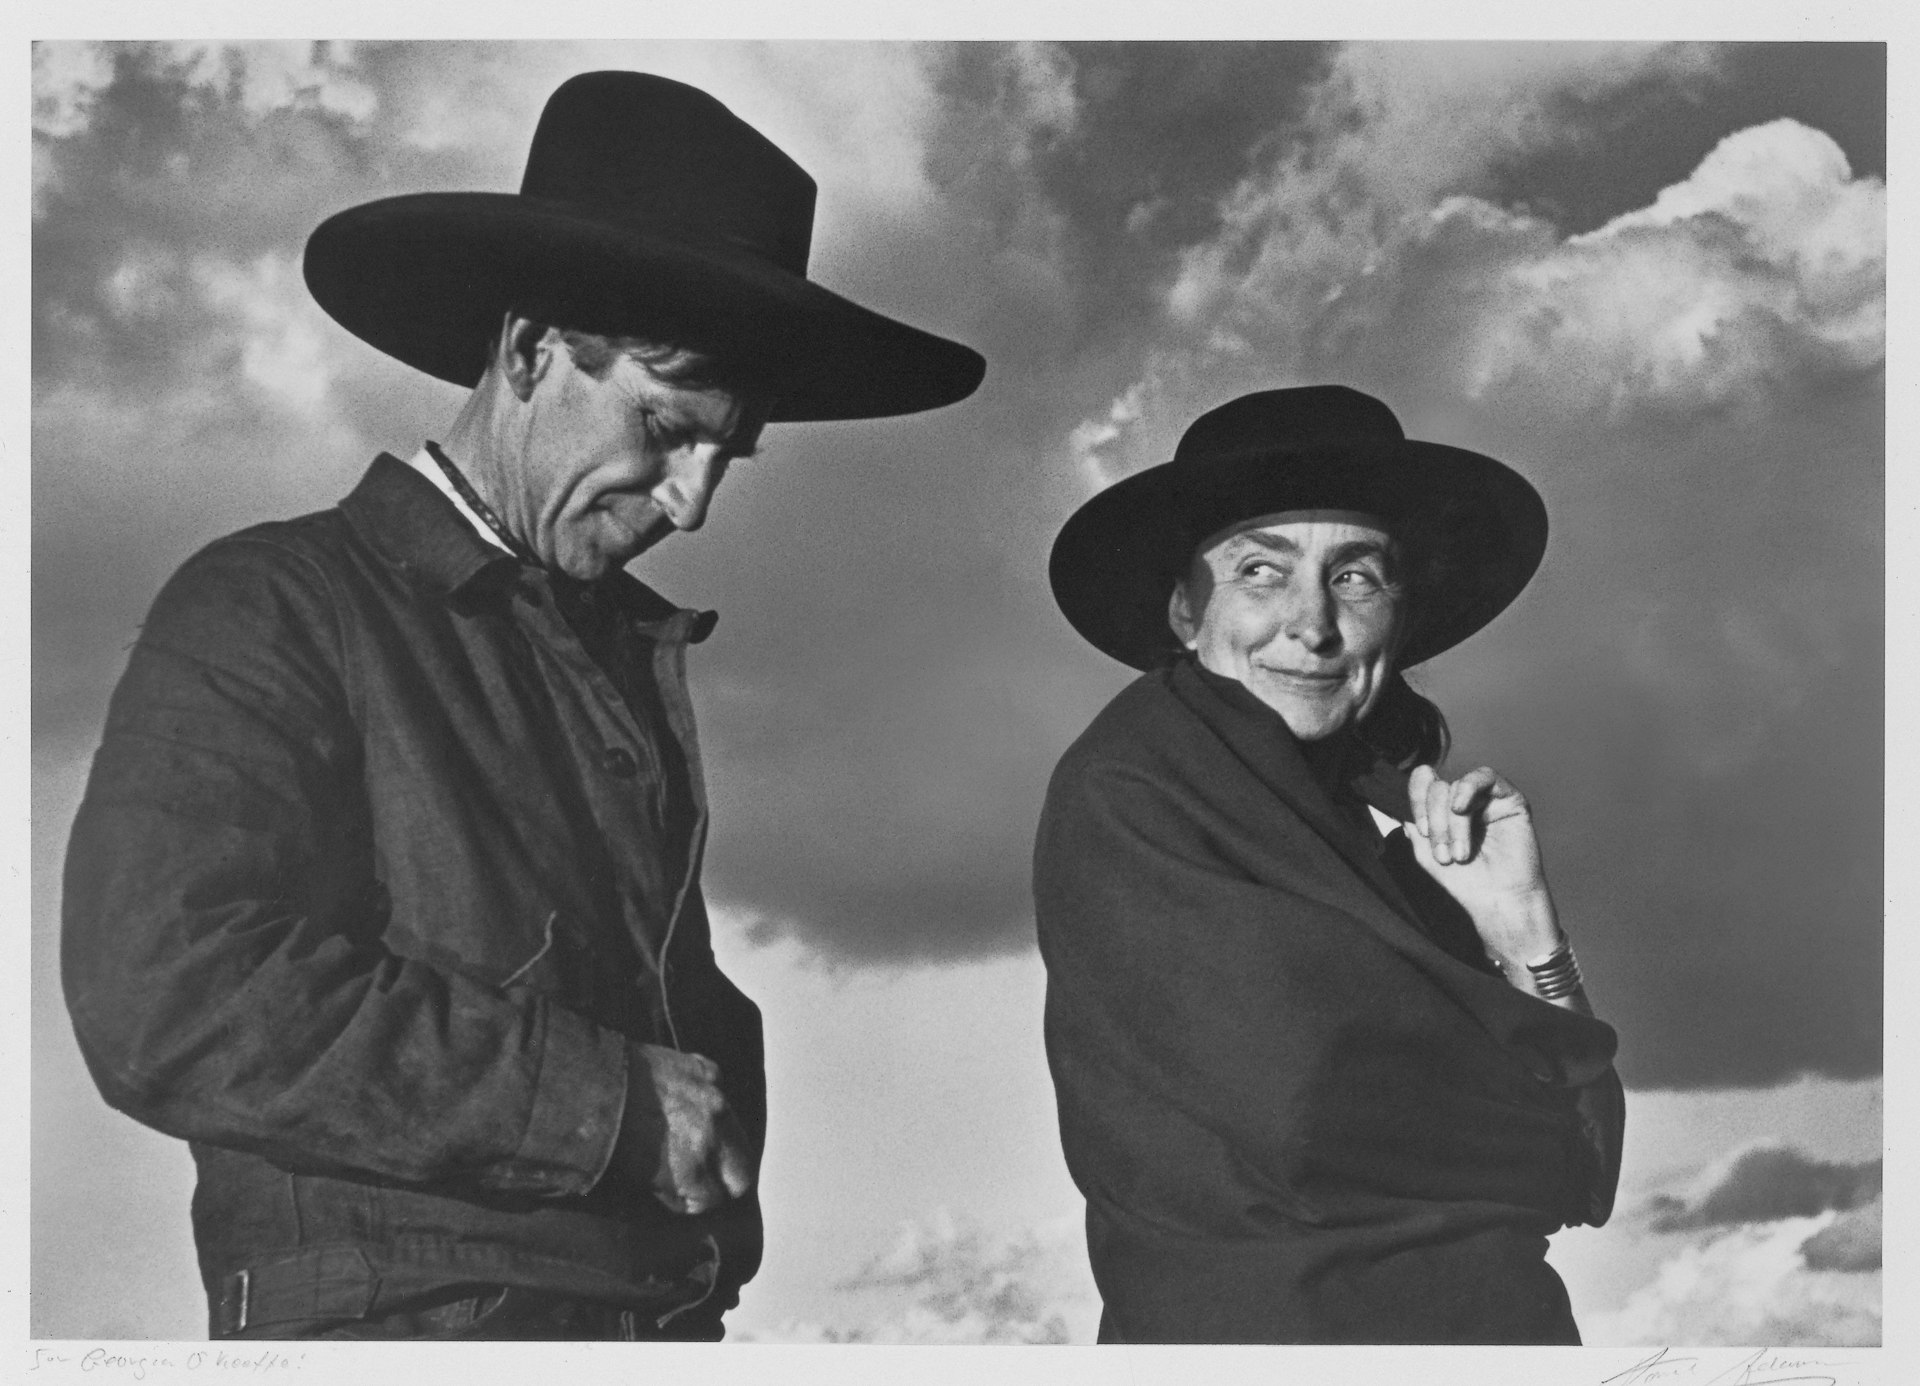 Ansel Adams (American, 1902–1984). Georgia O’Keeffe and Orville Cox, 1937. Georgia O’Keeffe Museum, Santa Fe, N.M.; Gift of The Georgia O’Keeffe Foundation, 2006.06.1480. © 2016 The Ansel Adams Publishing Rights Trust